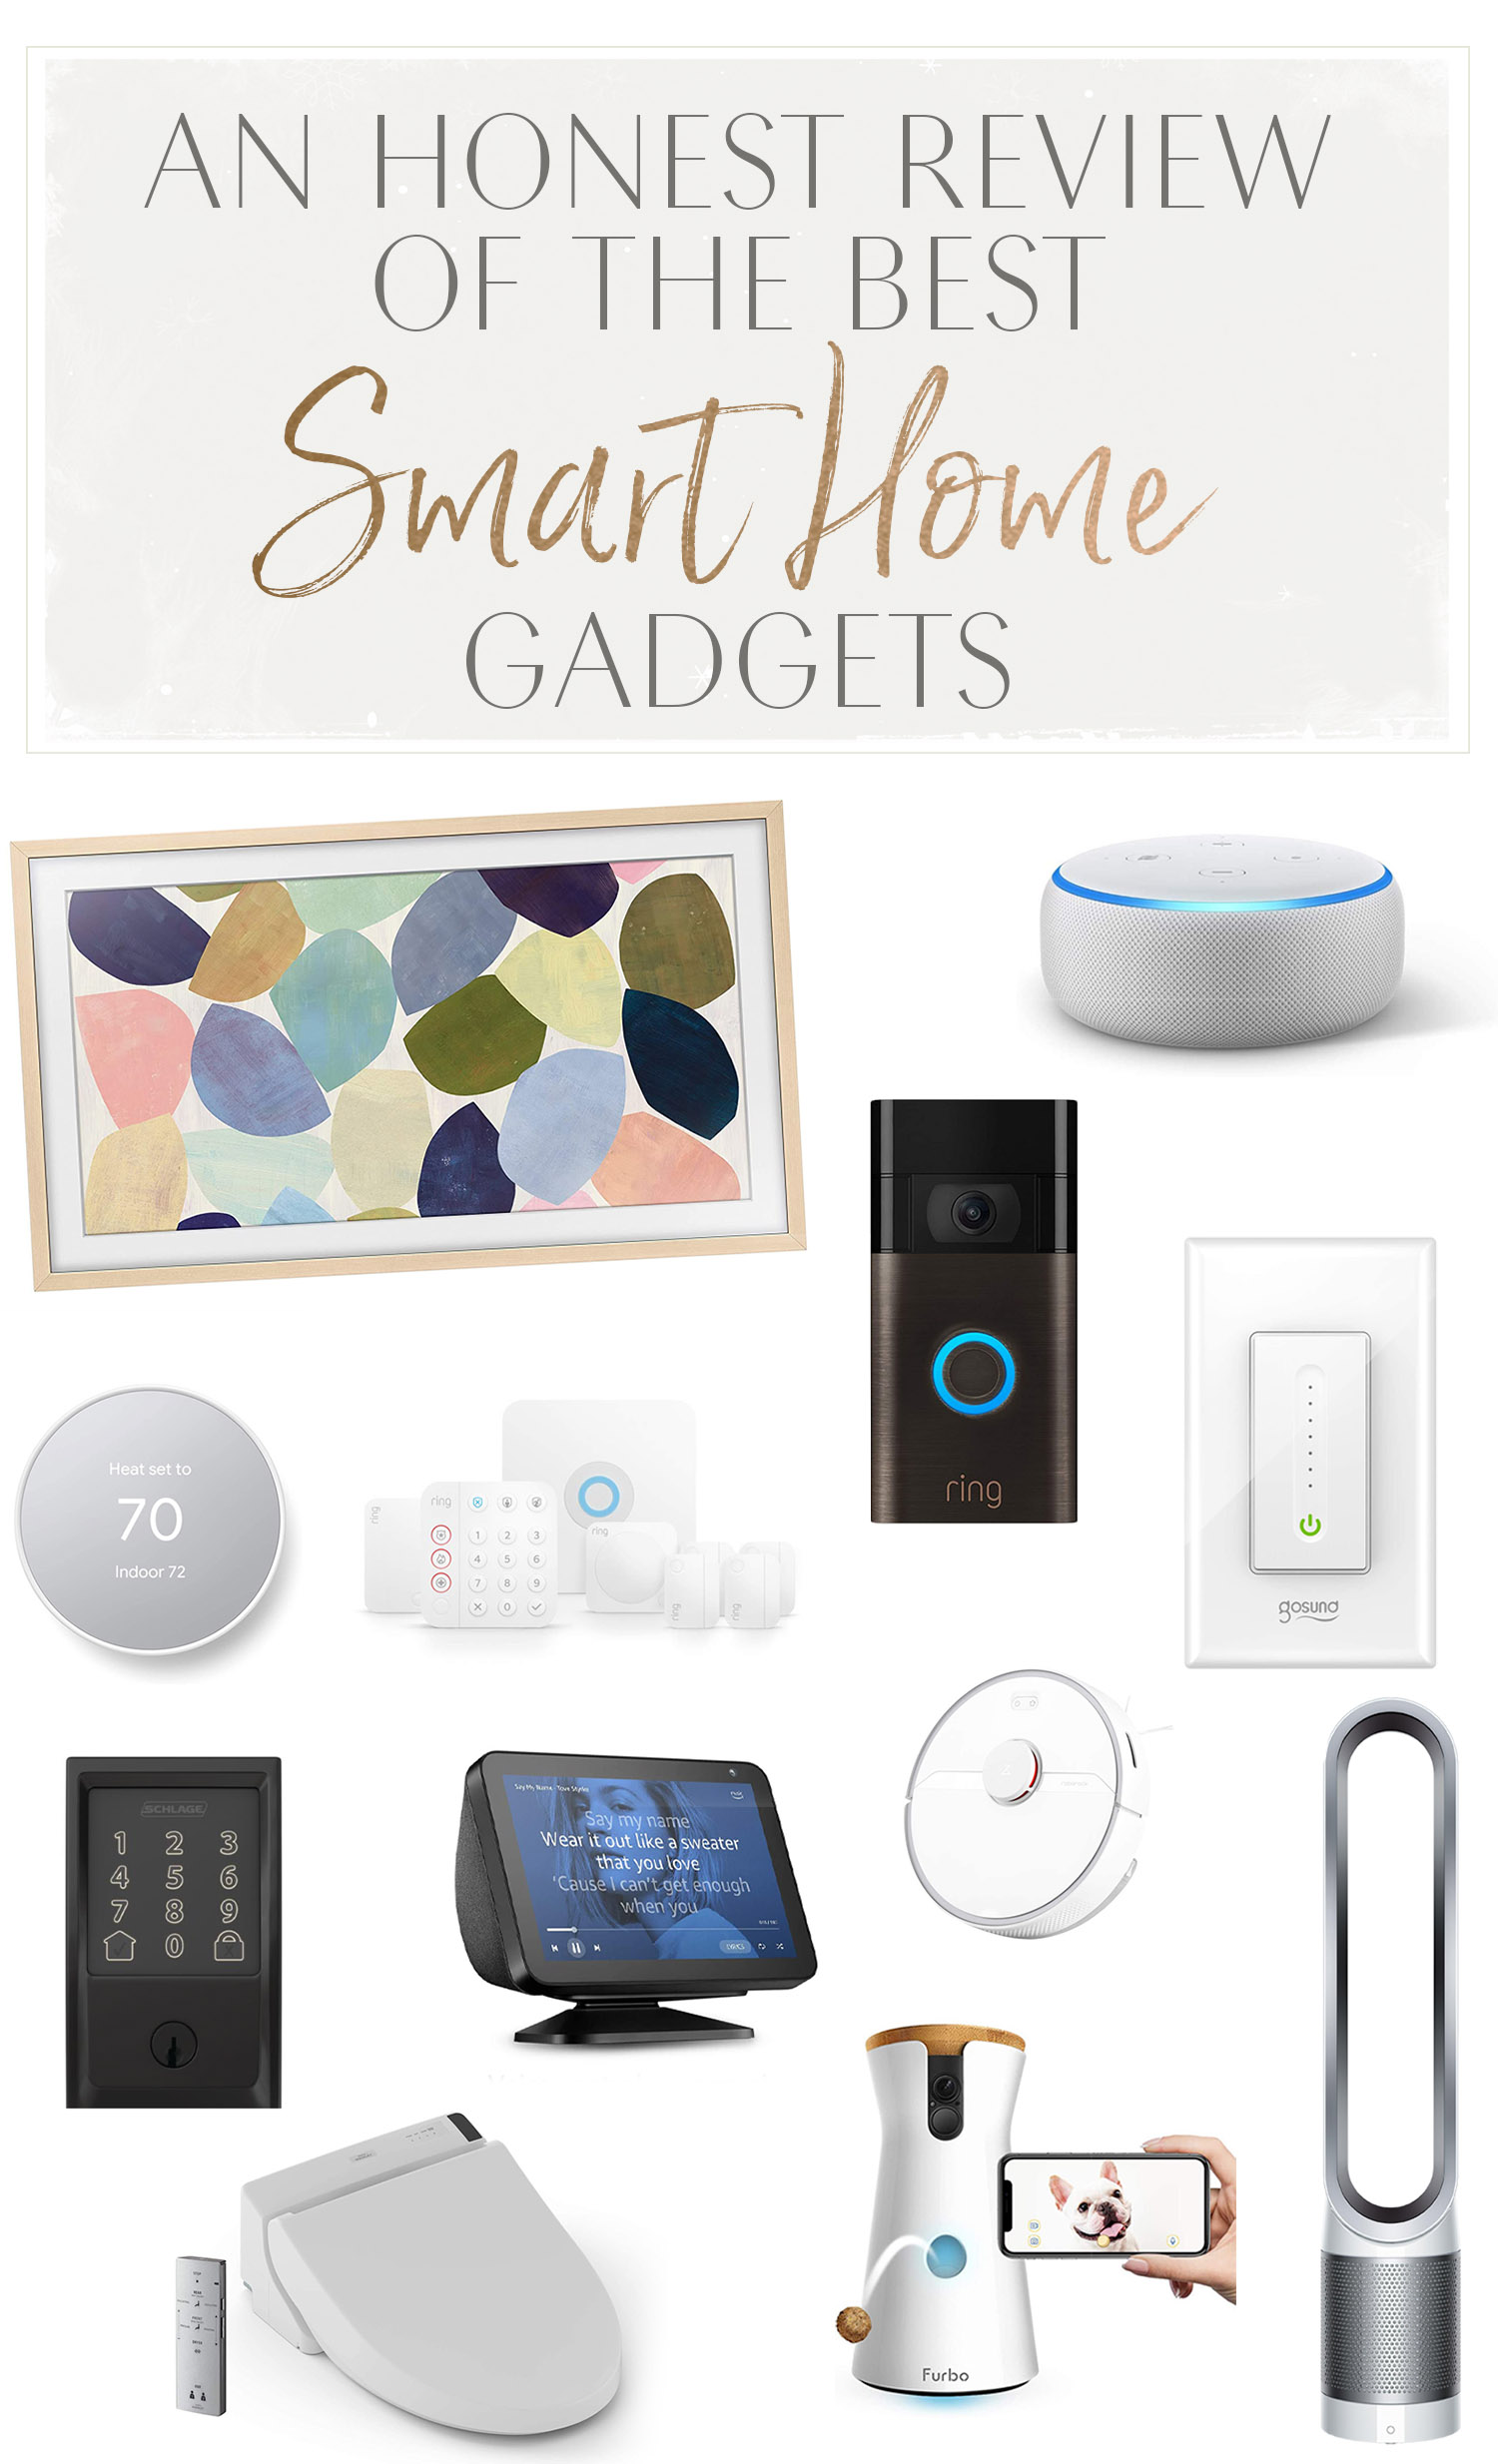 https://theblondeabroad.com/wp-content/uploads/2020/11/An-Honest-Review-of-the-Best-Smart-Home-Gadgets.jpg